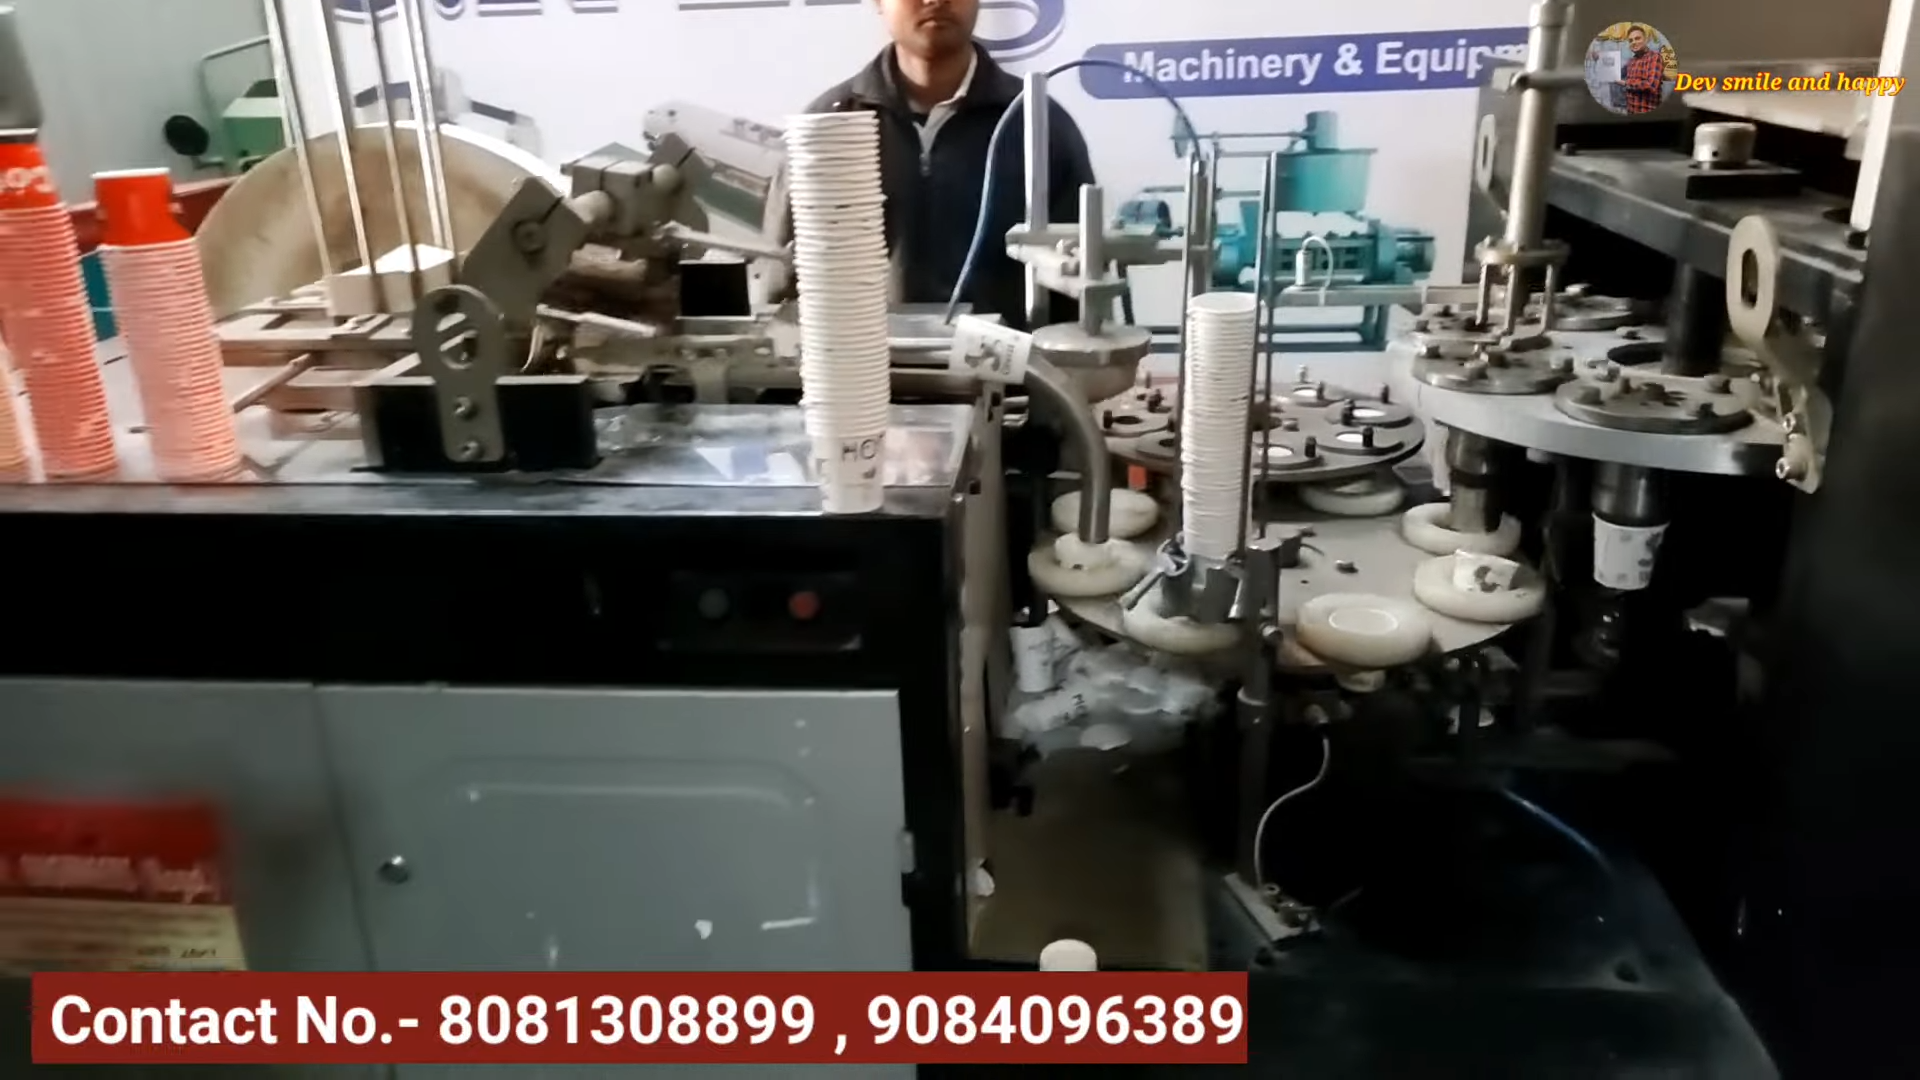 FULLY AUTOMATIC PAPER CUP MAKING MACHINE urgent sale in Bihar